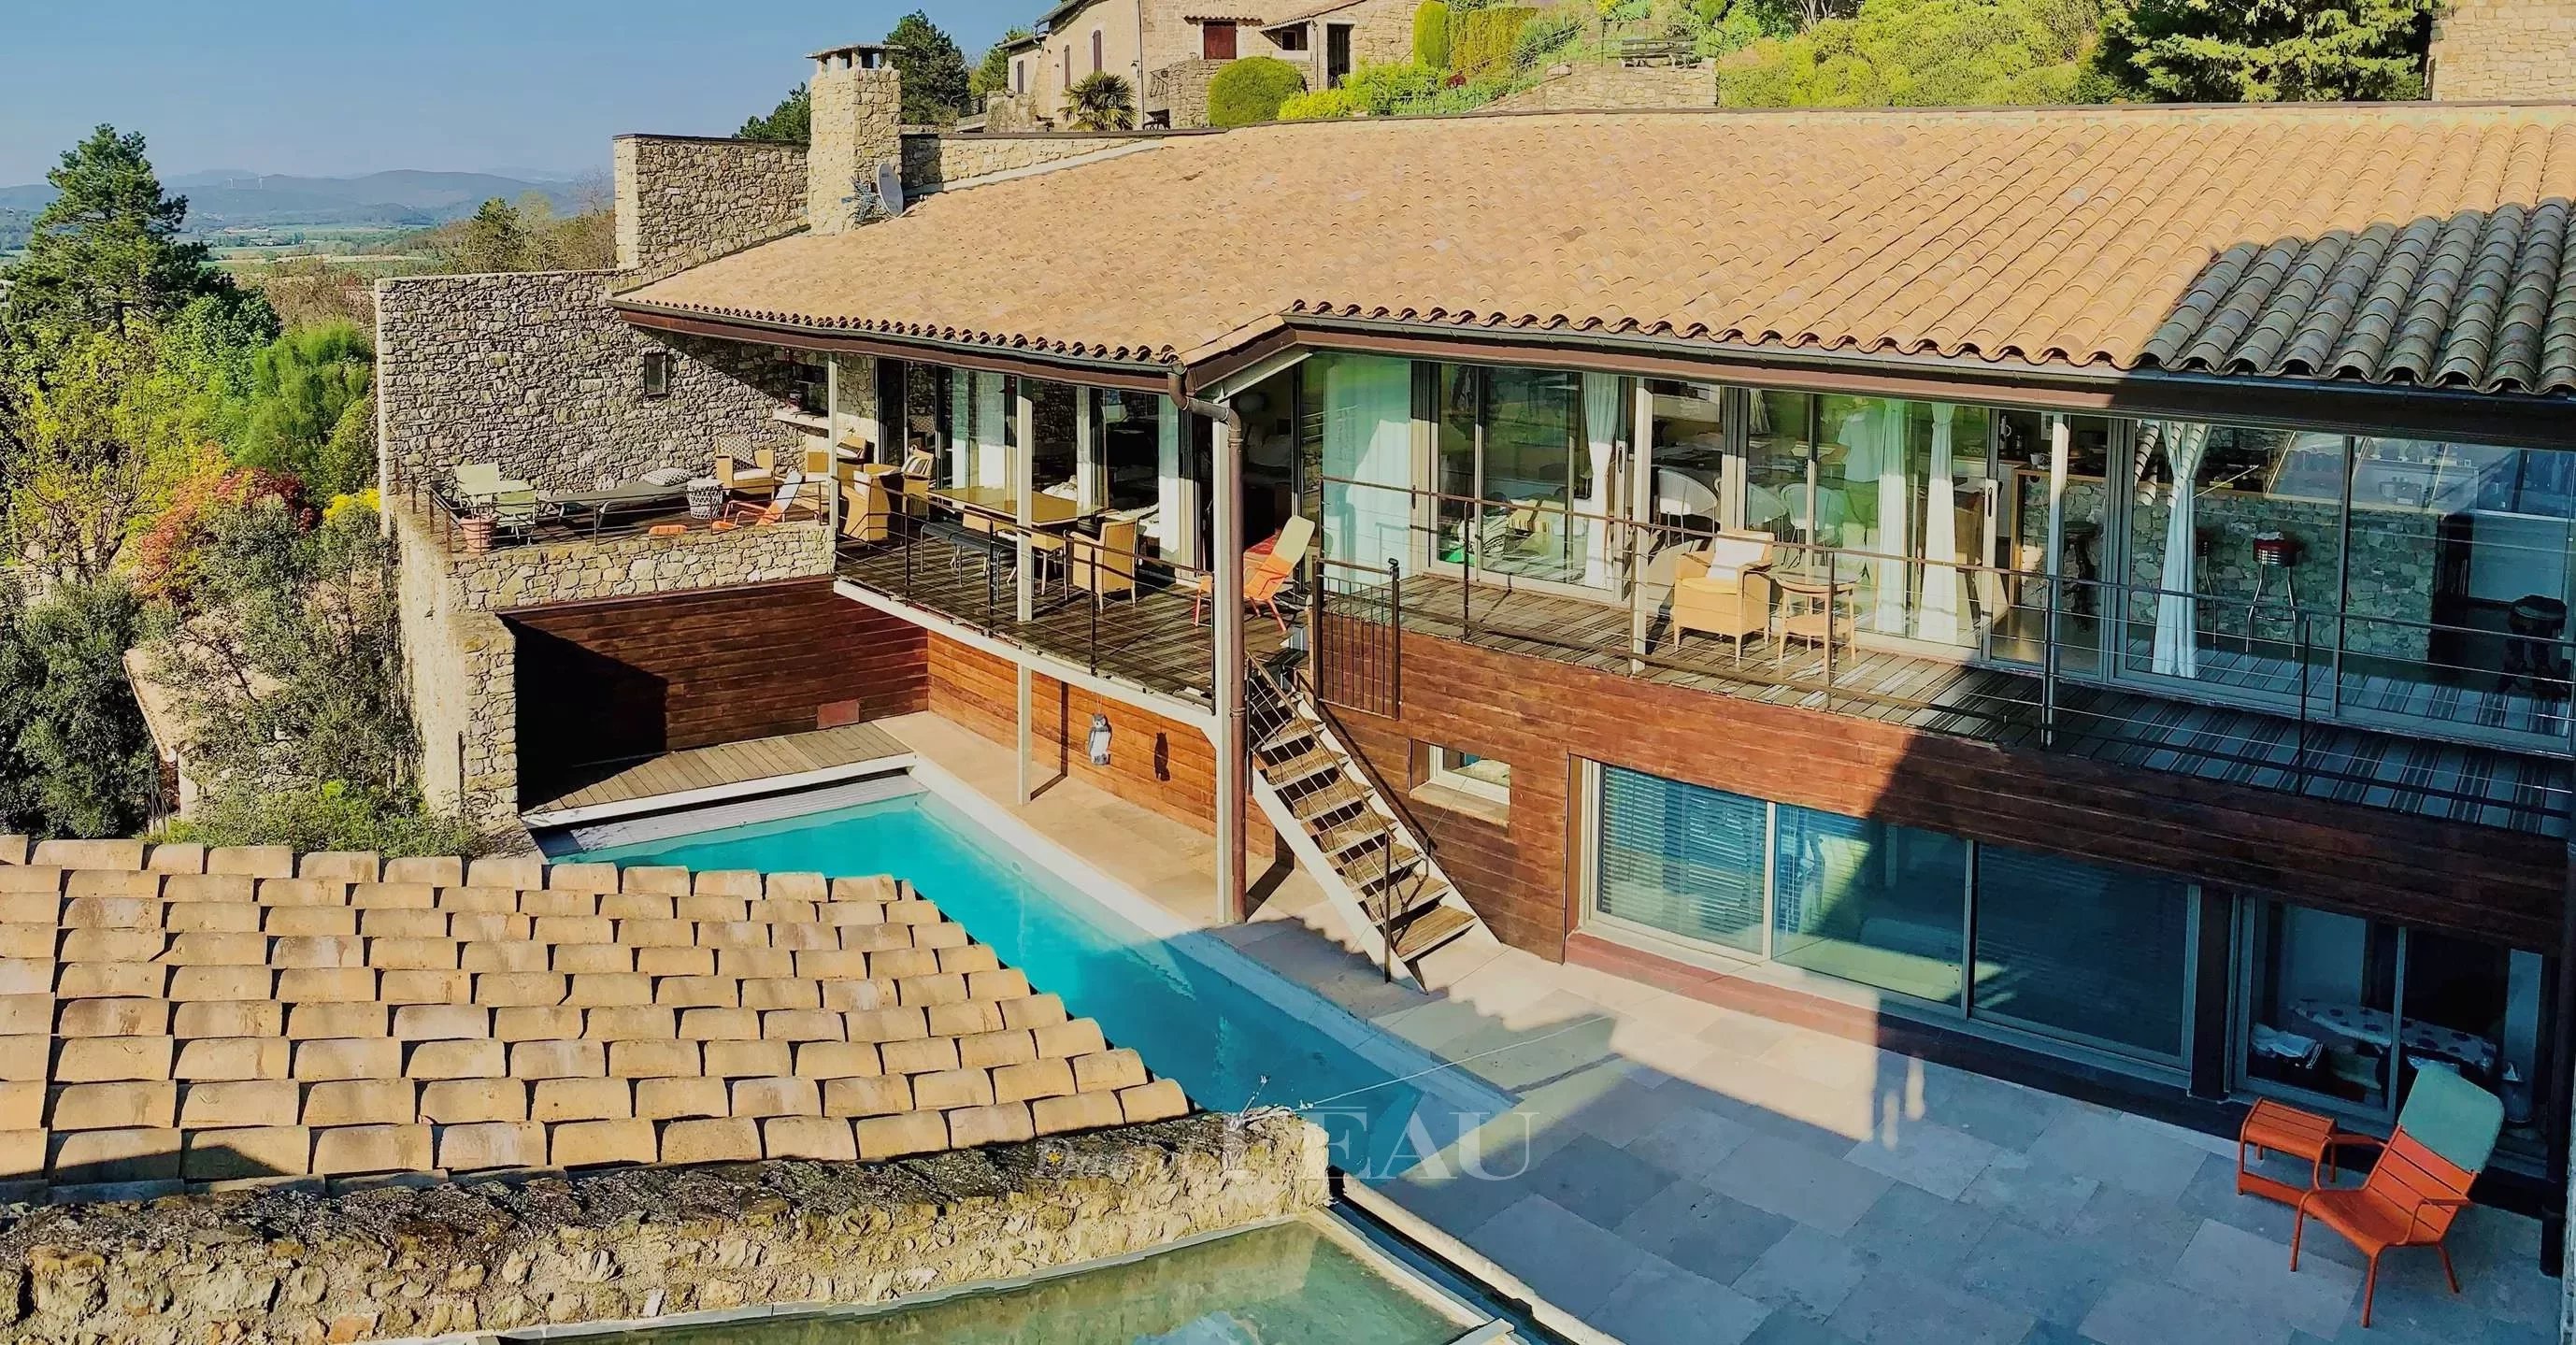 Drôme Provençale  A property with a swimming pool  Sleeps 10